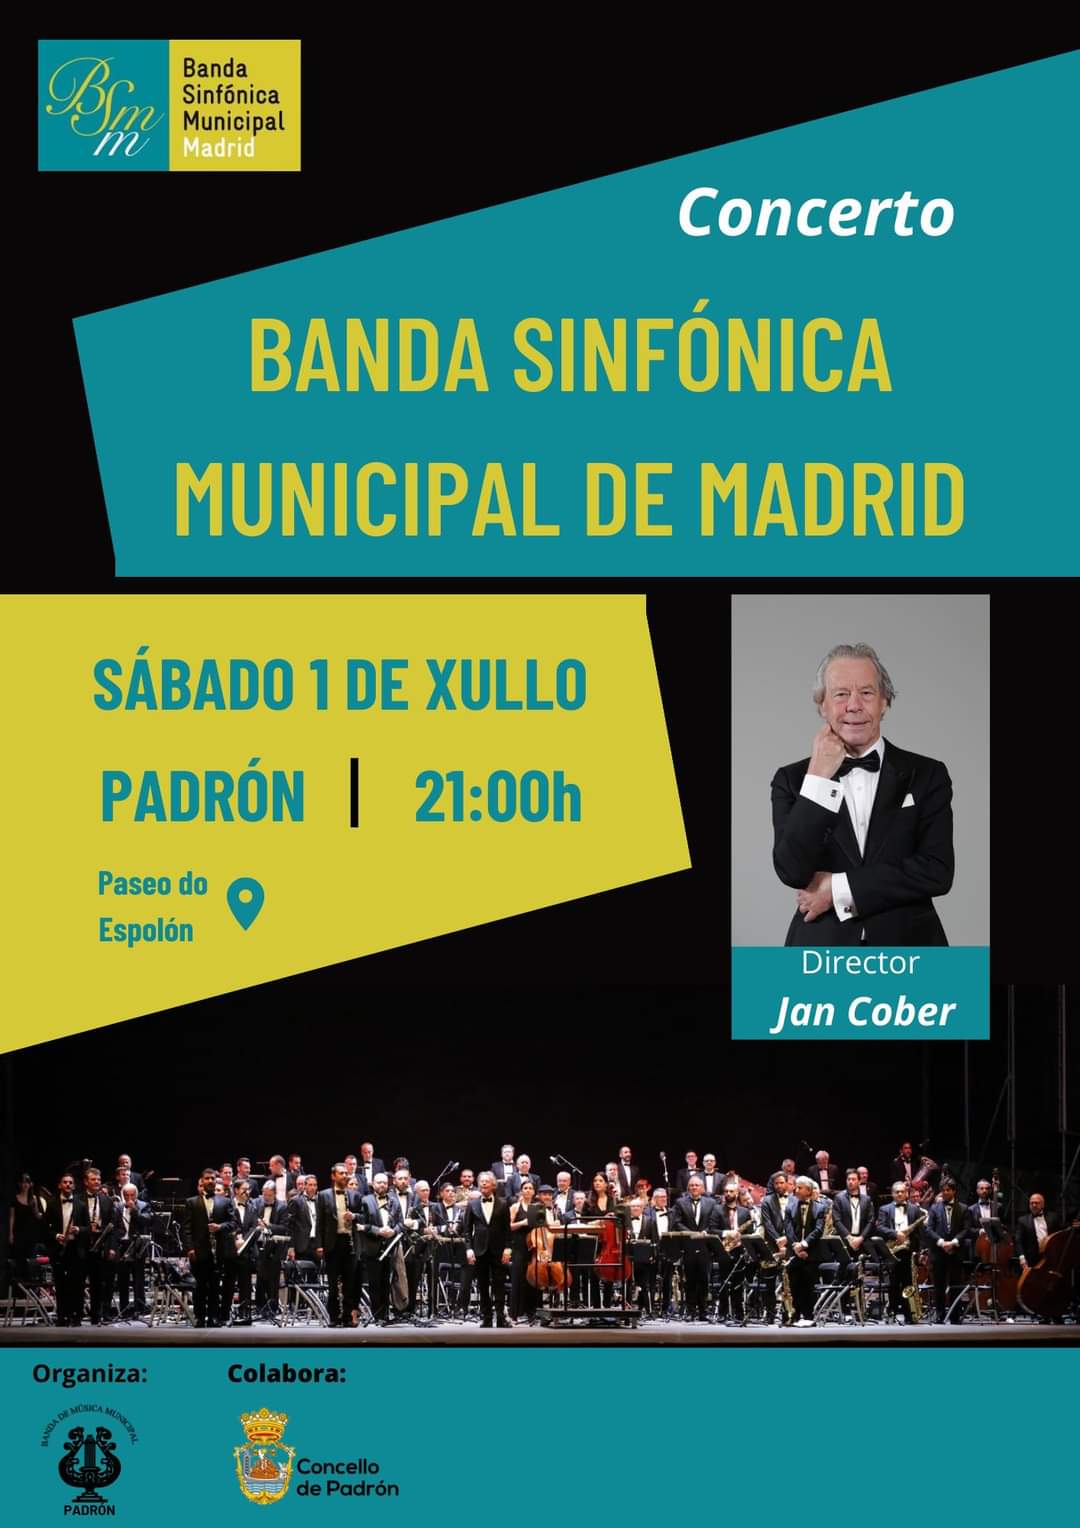 Concerto da Banda Sinfónica Municipal de Madrid